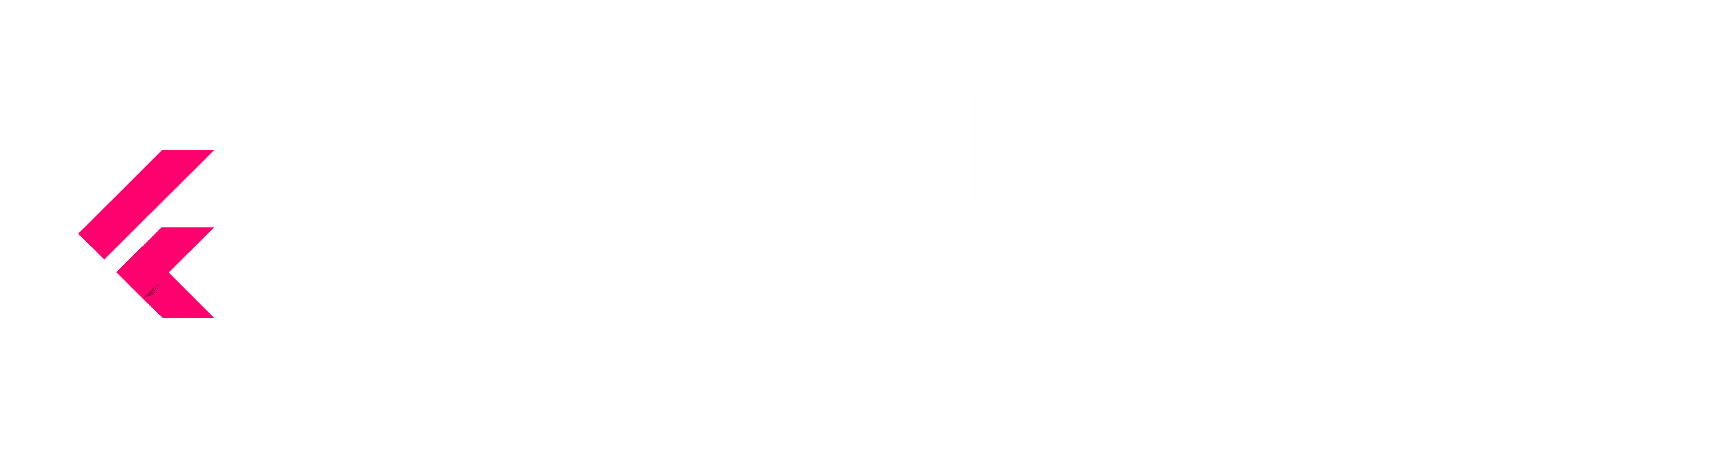 TNC Collective